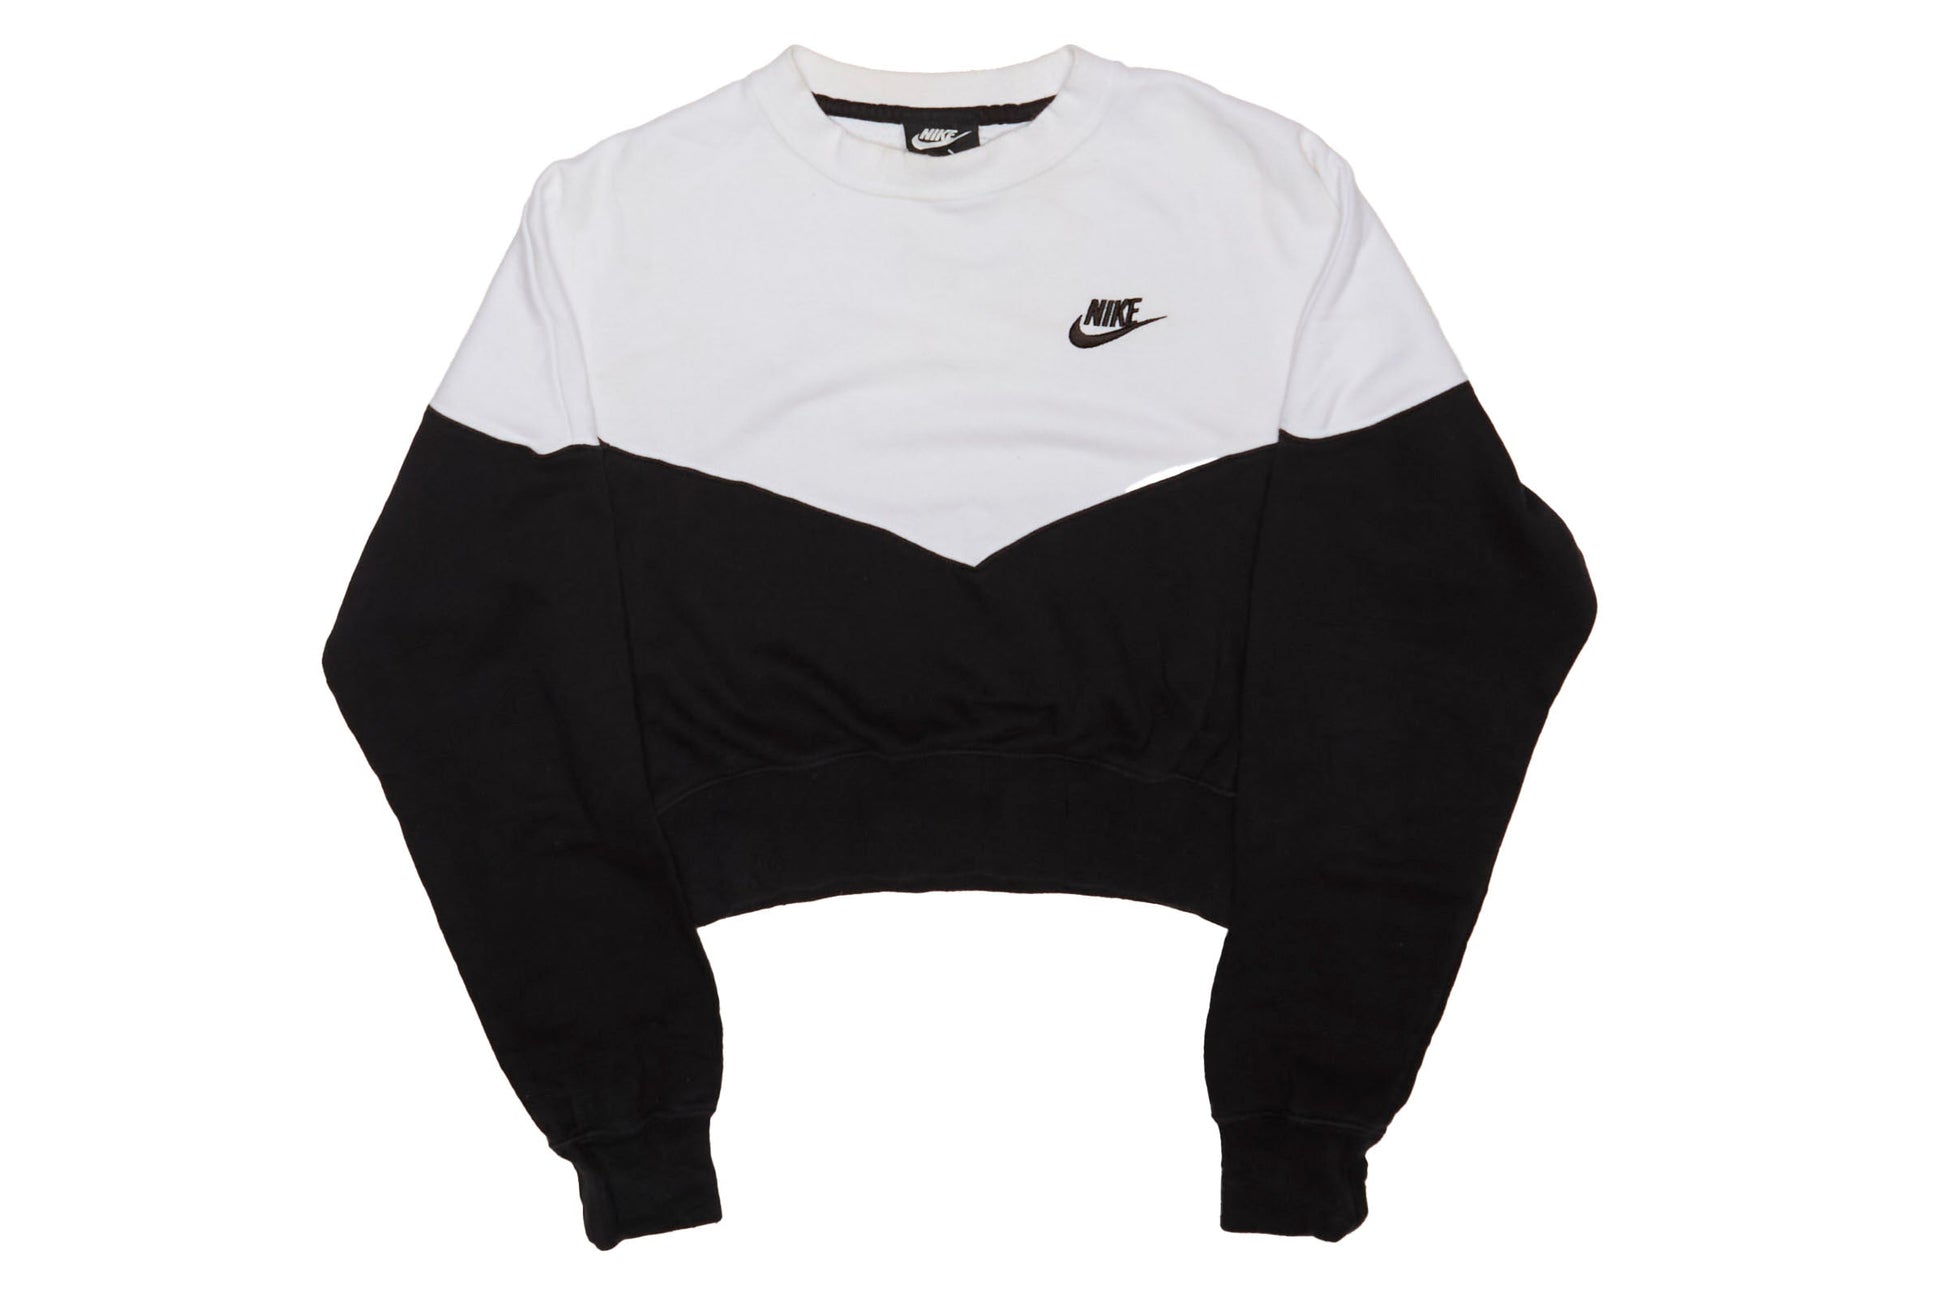 Womens Nike Crop Top Sweatshirt - XS